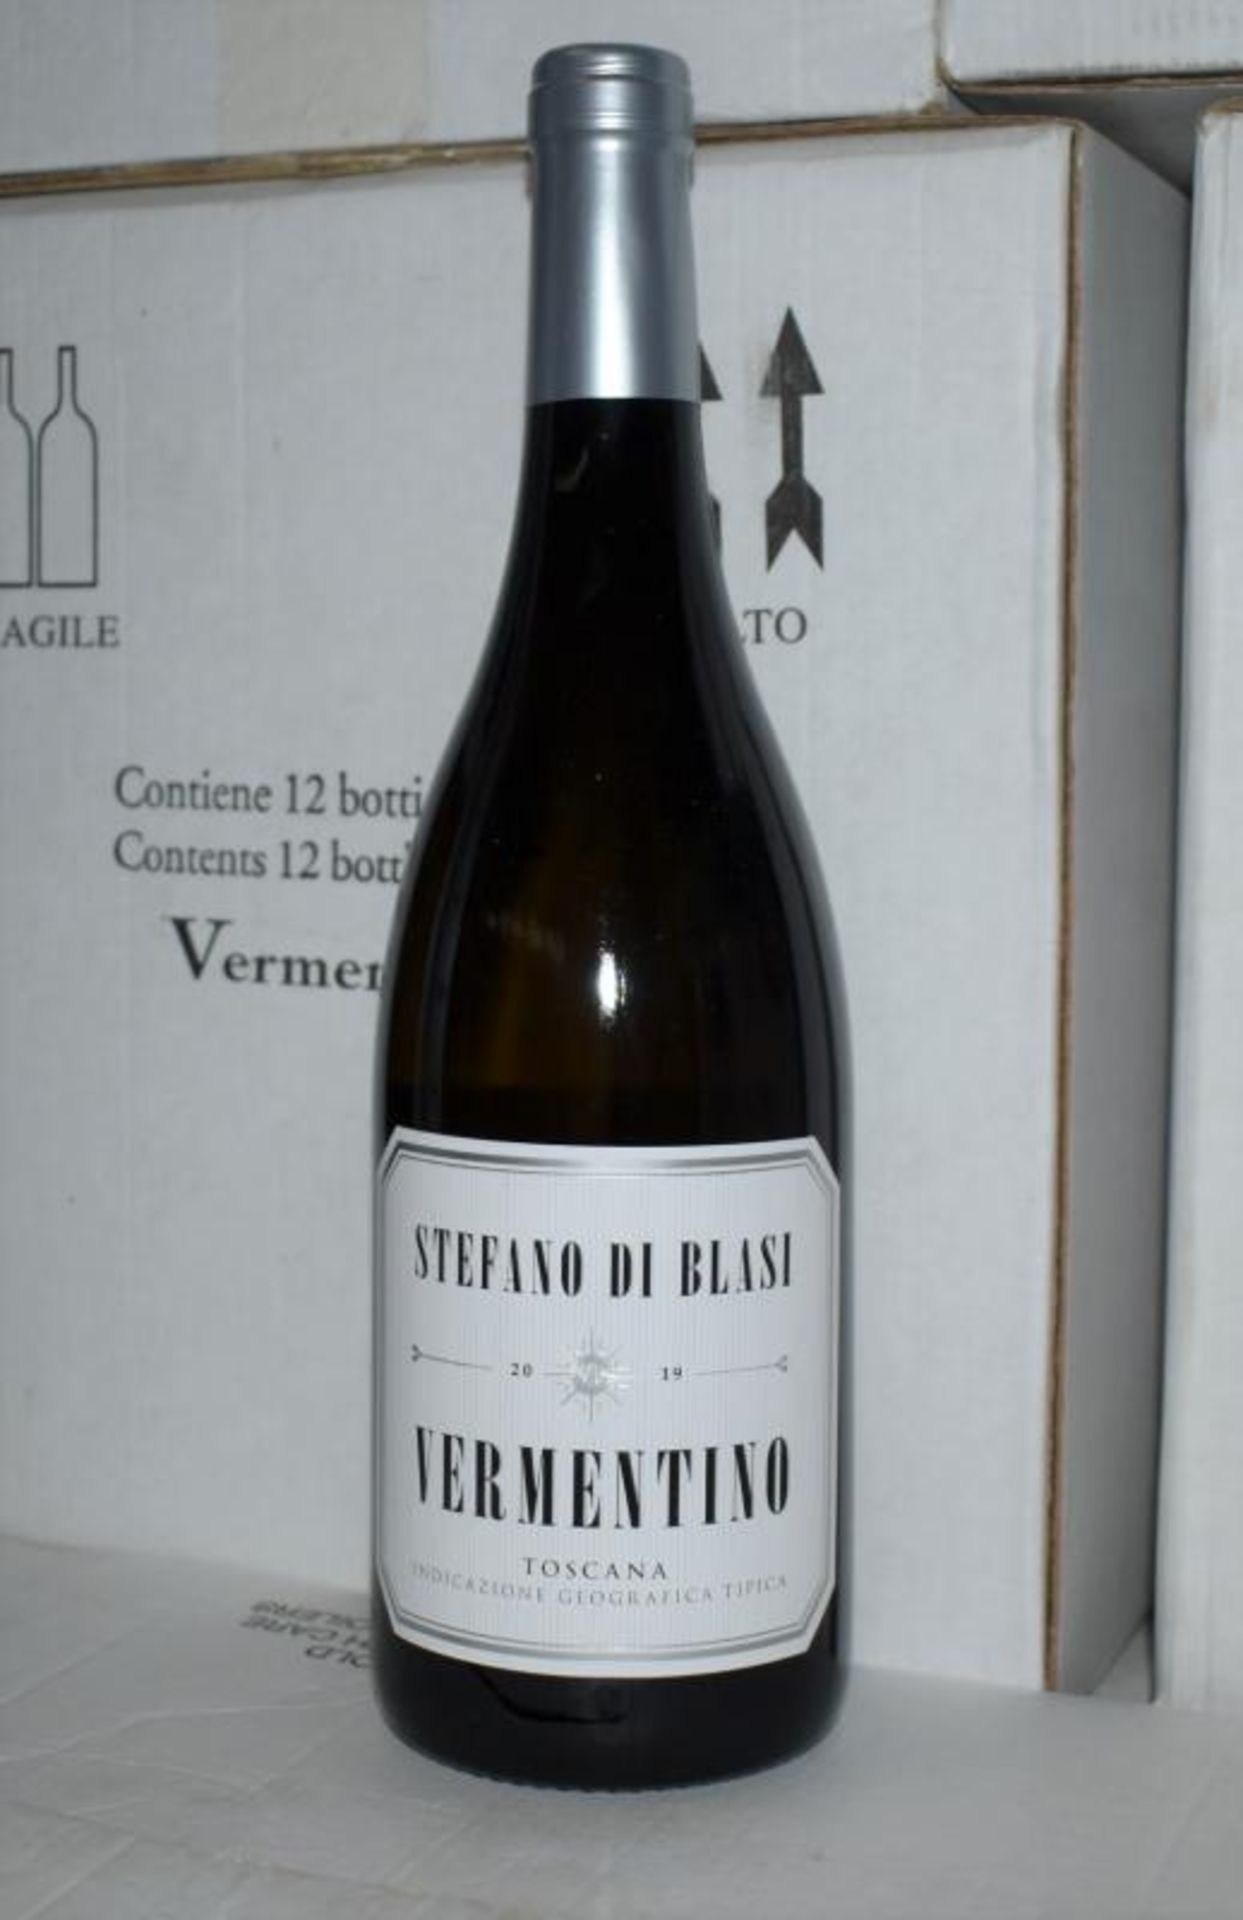 12 x Bottles of Stefano Di Blasi 2019 Vermentino Toscana 13.5% Wine - 750ml Bottles - Drink Until 20 - Image 6 of 6